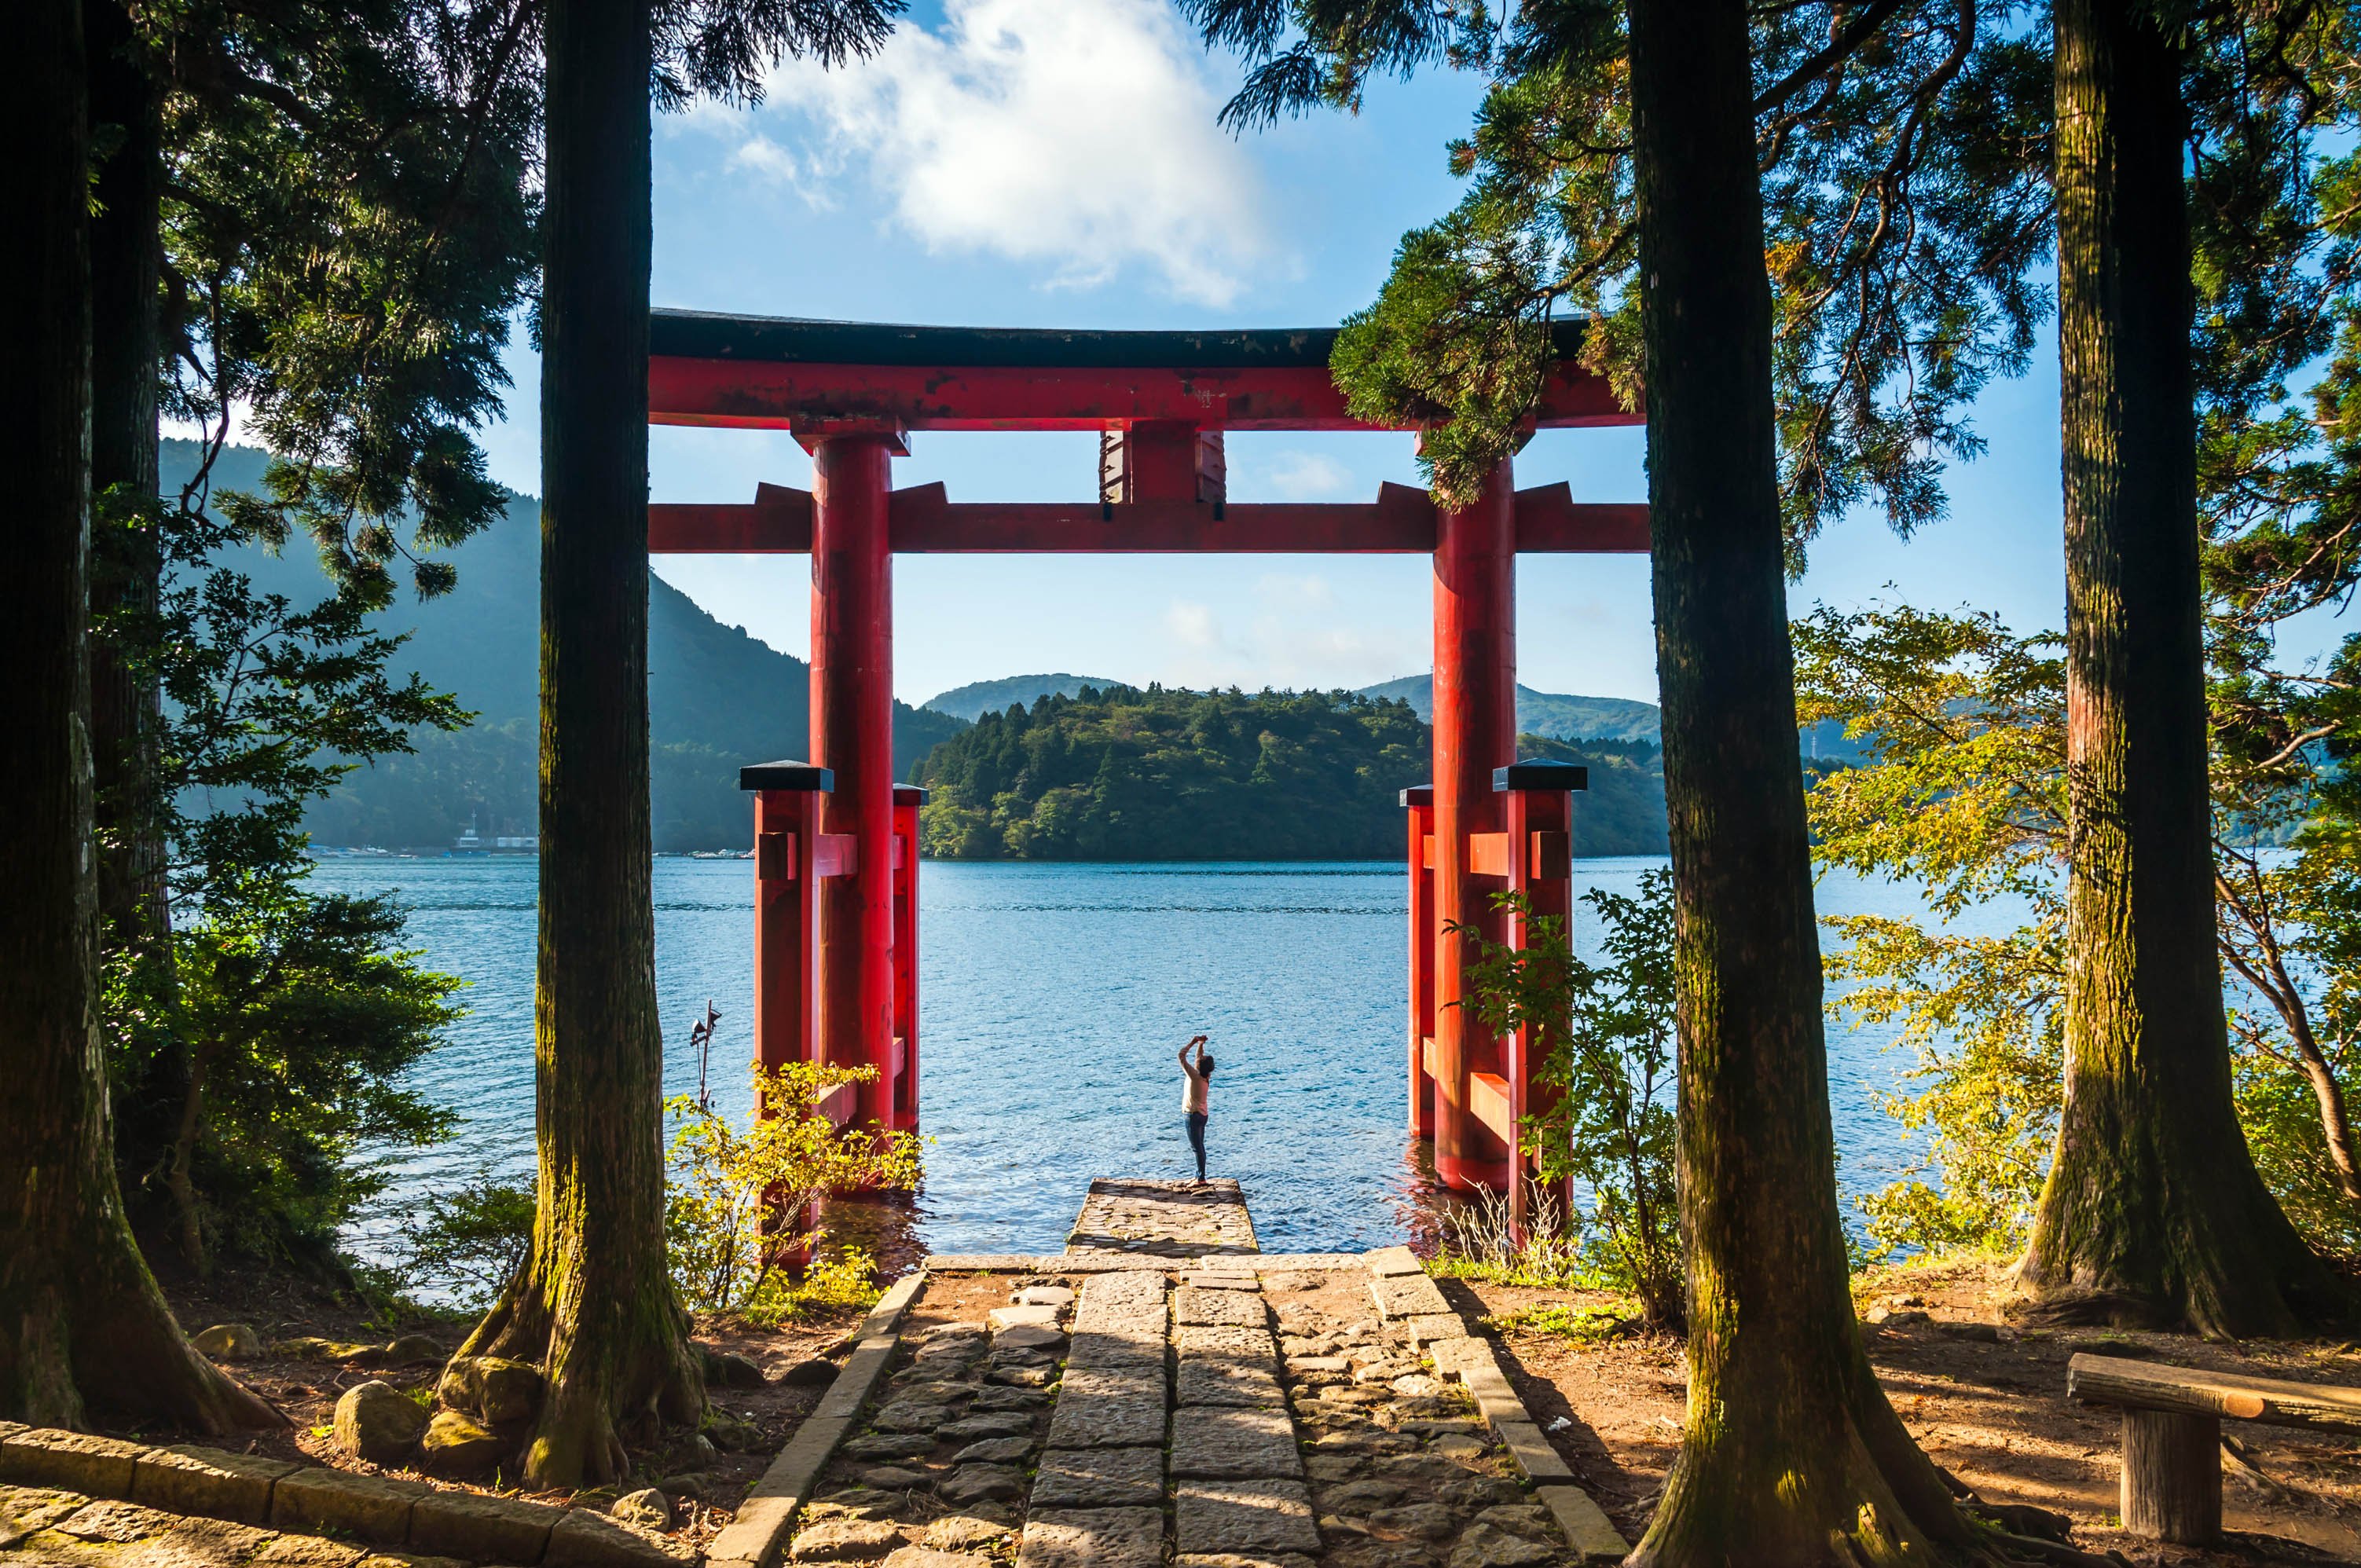 Discover Japan's history around every corner